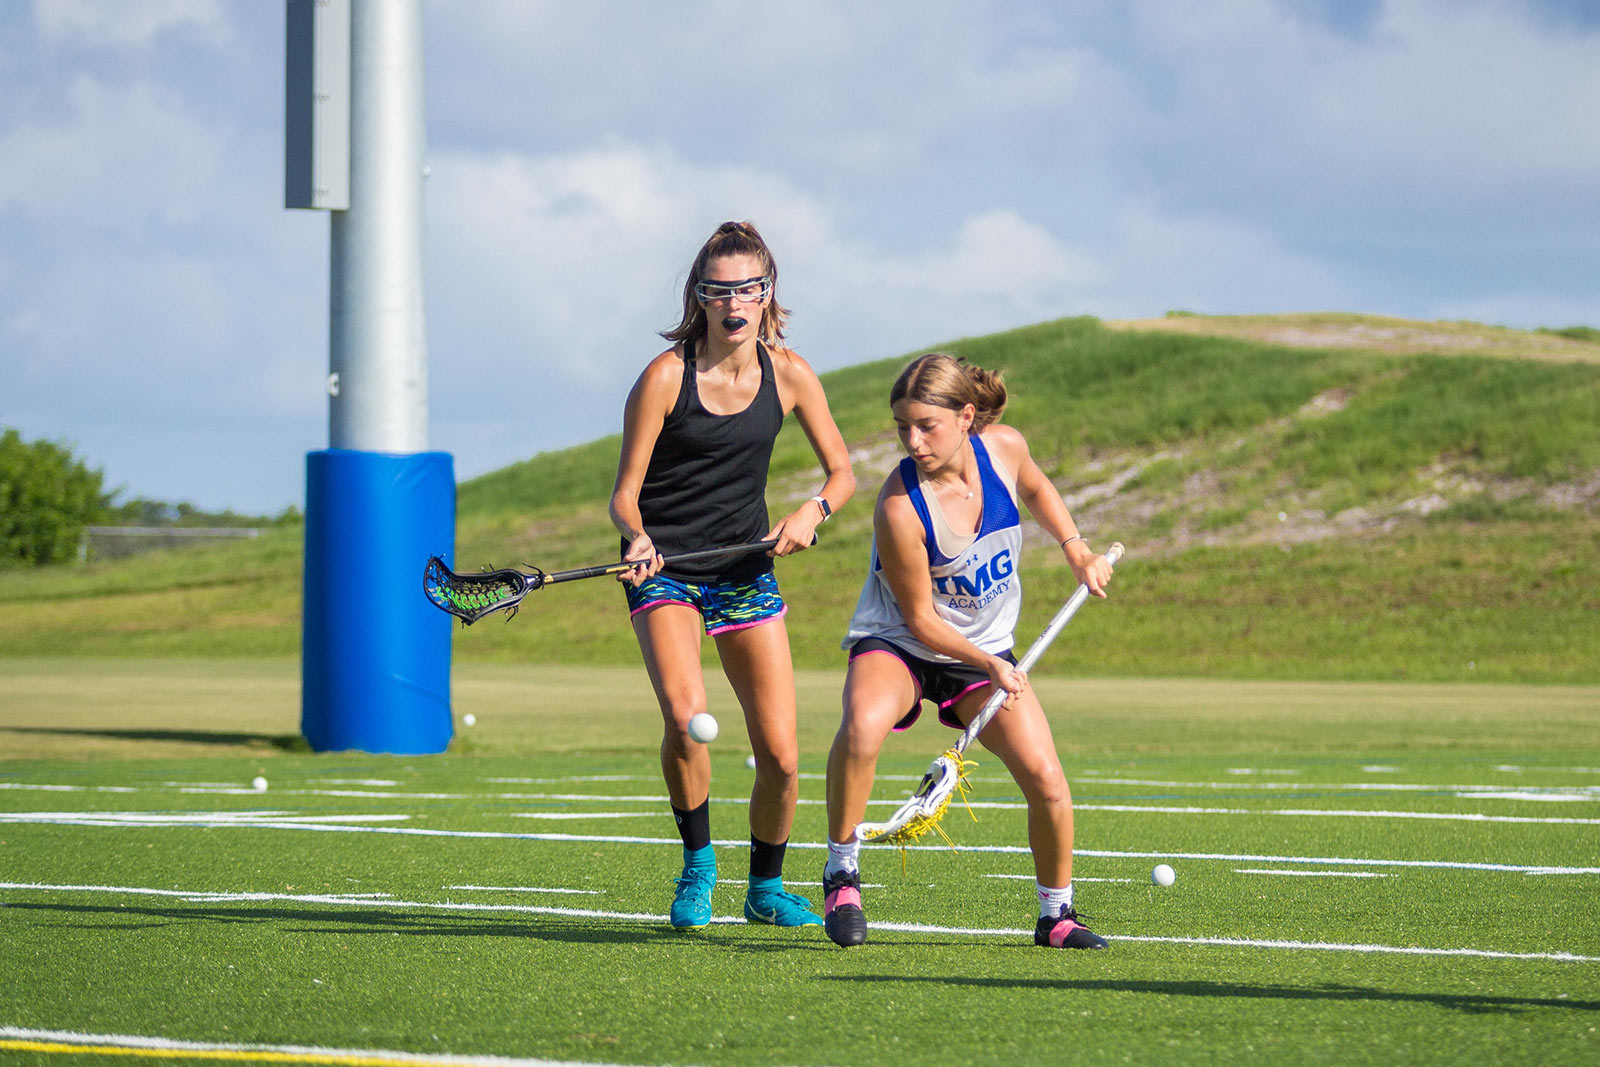 Girls Lacrosse Camps Girls Lacrosse Training IMG Academy 2019